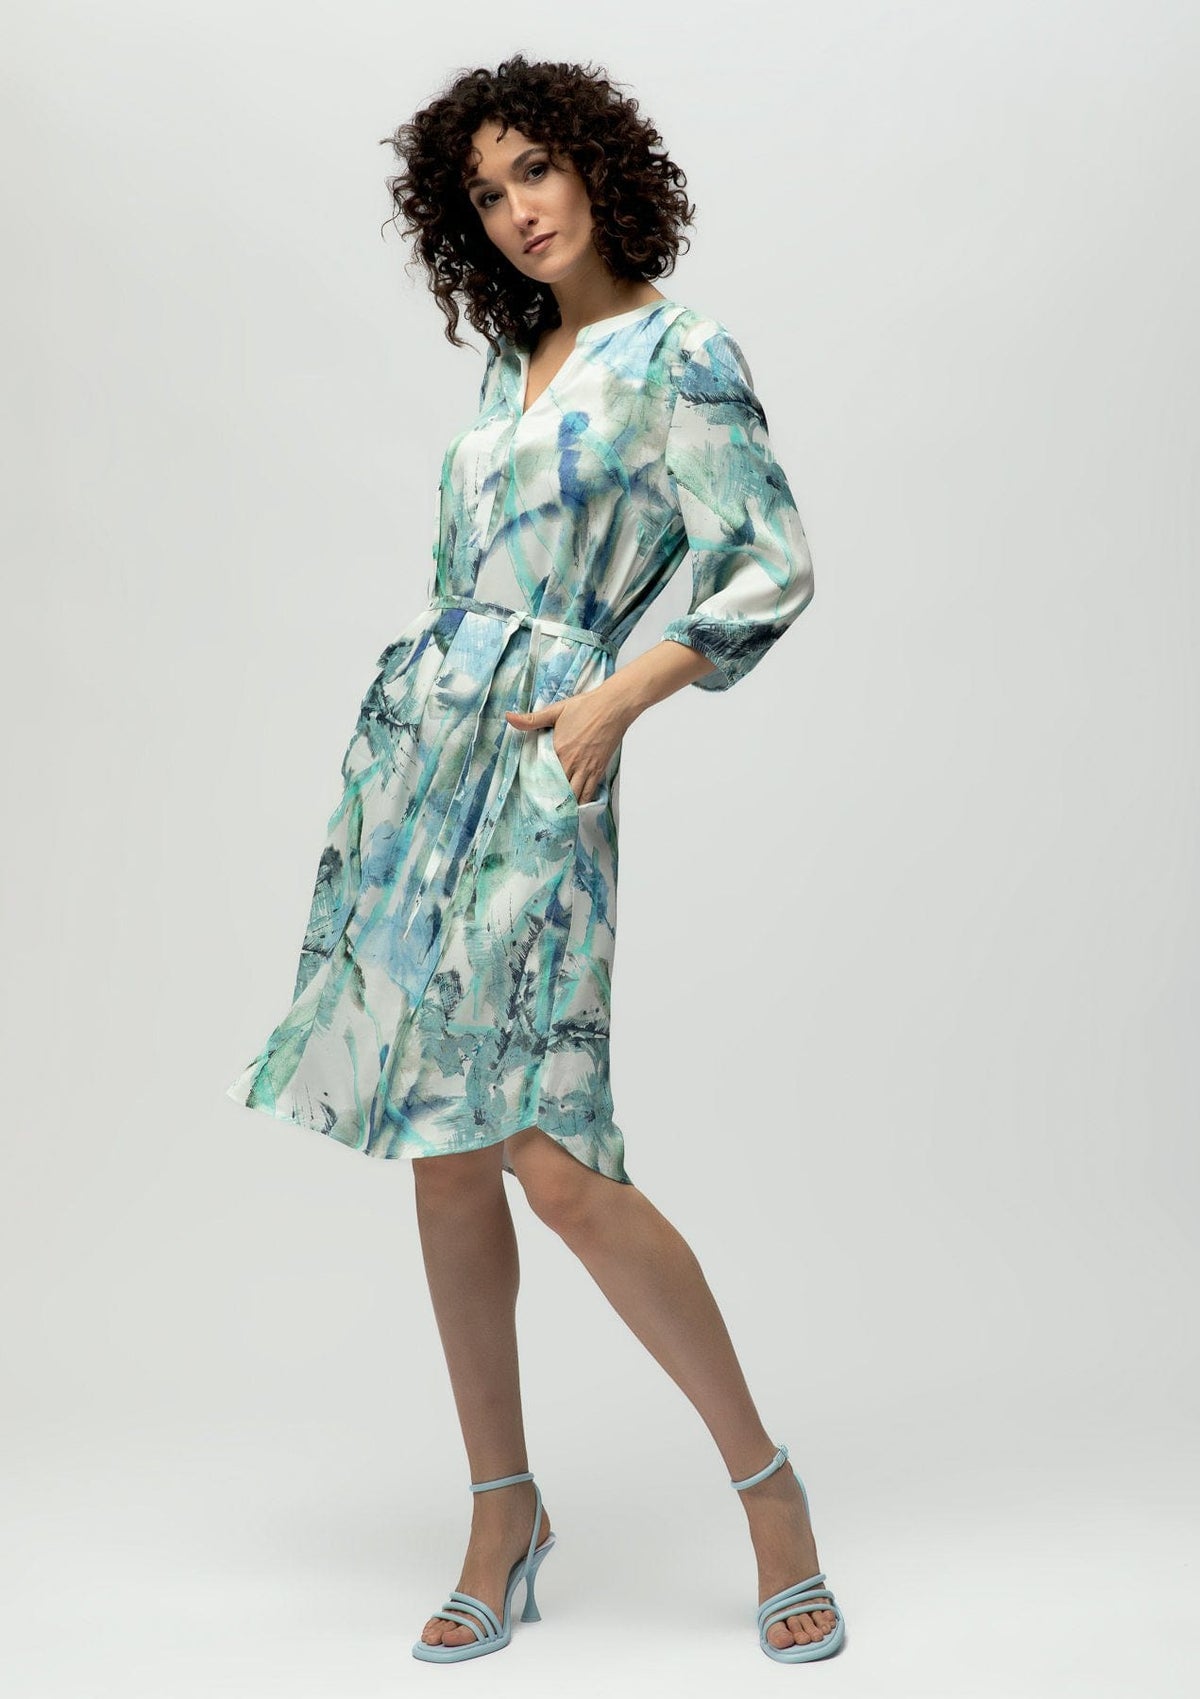 SuZa Marble Print Dress